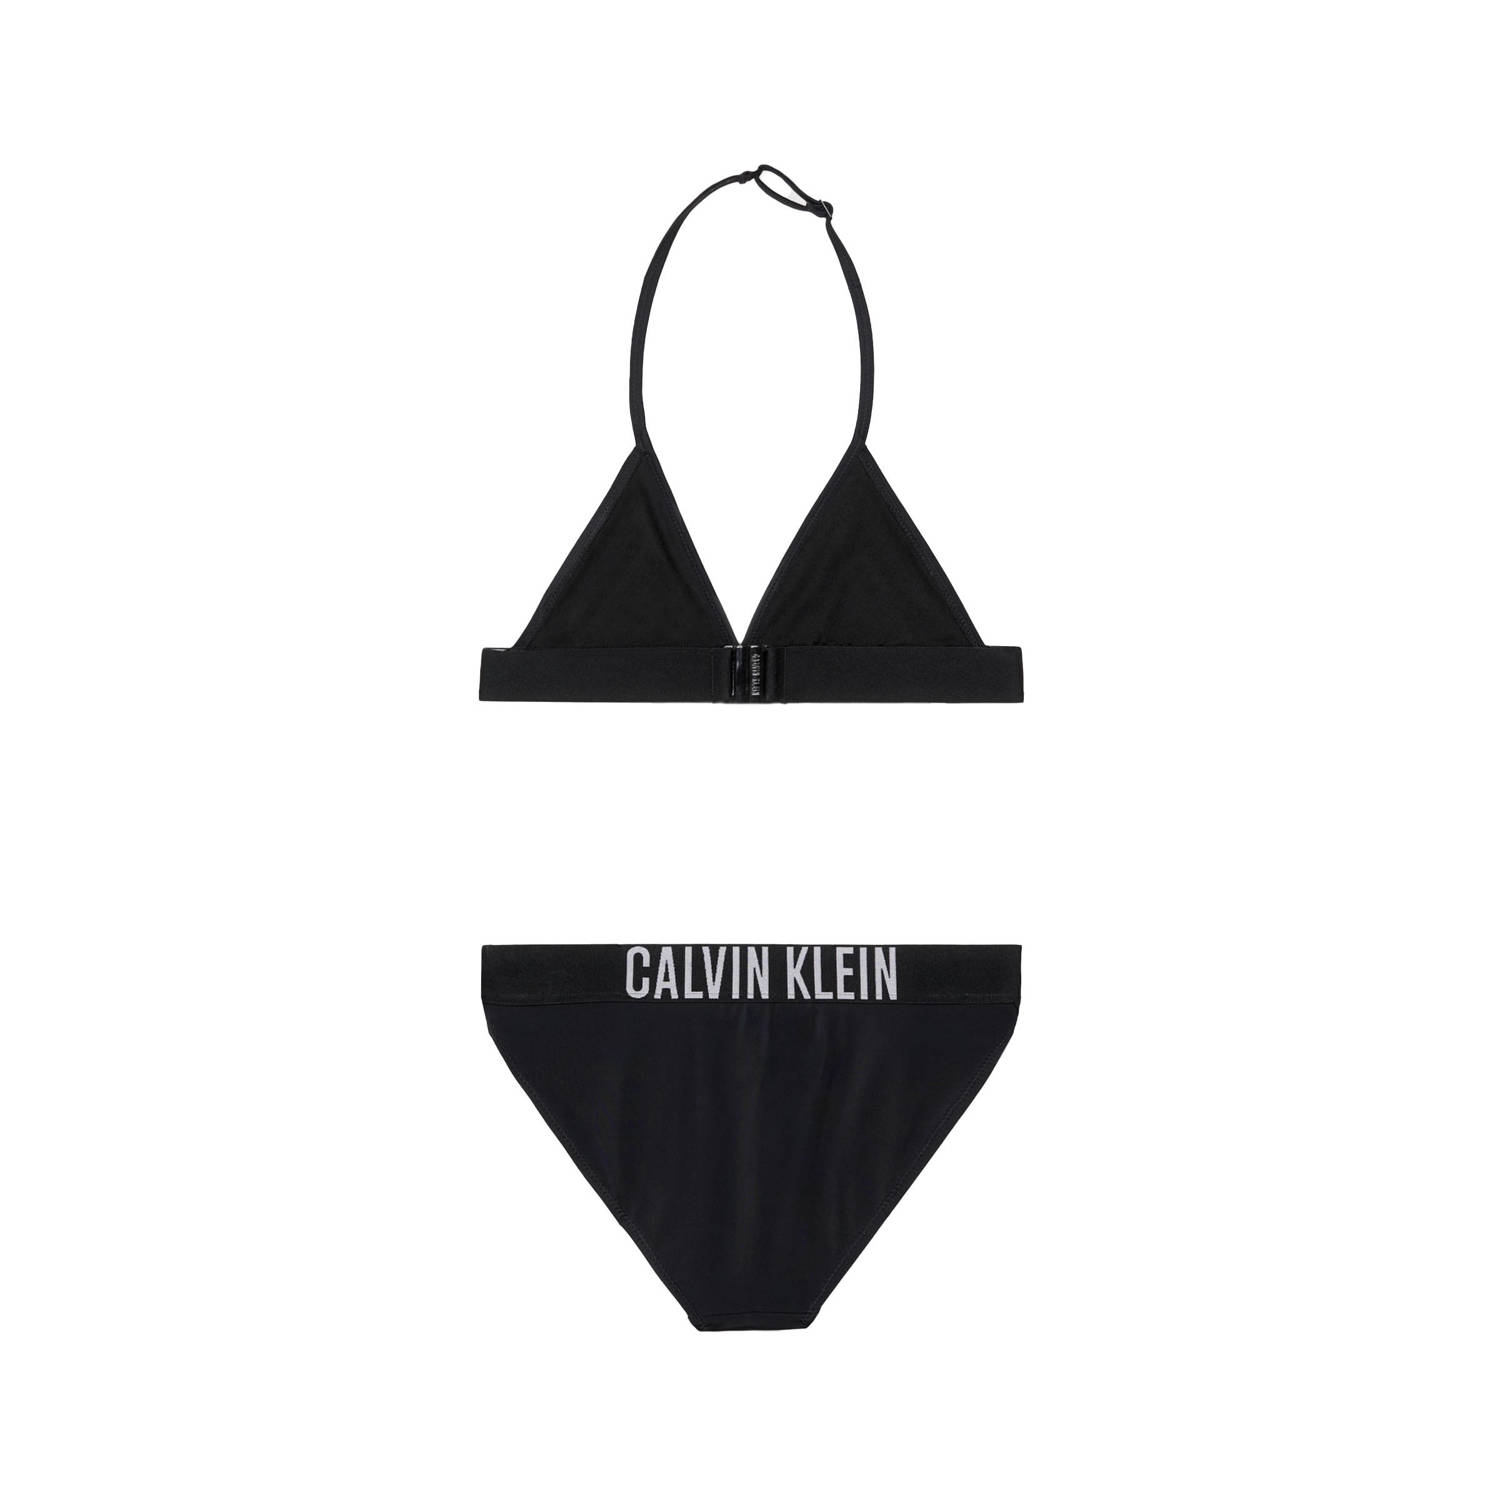 Calvin Klein triangel bikini zwart